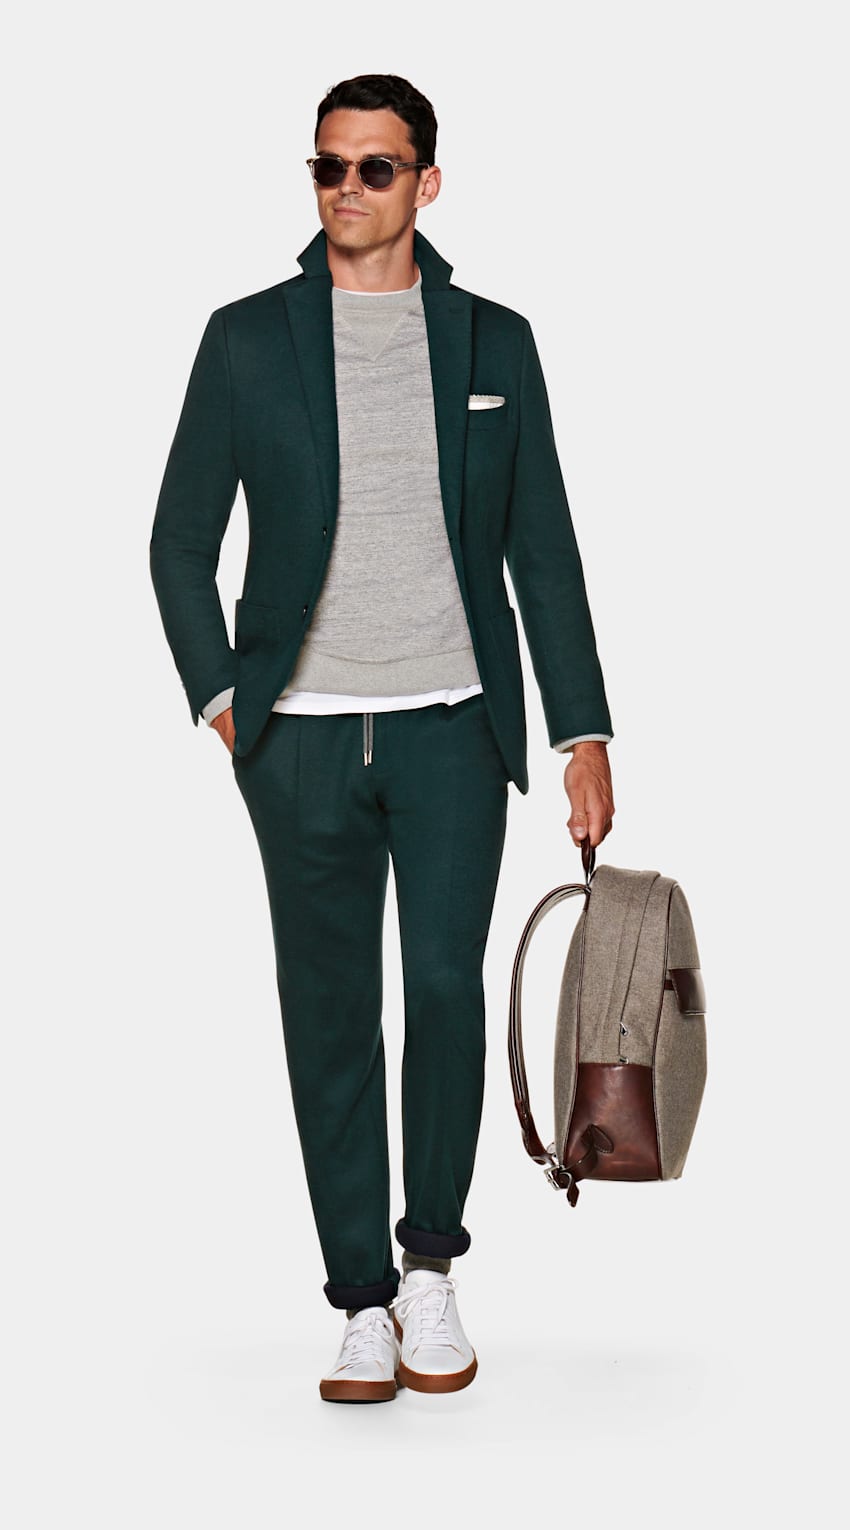 SUITSUPPLY  - Leomaster, Italie Havana Green Suit